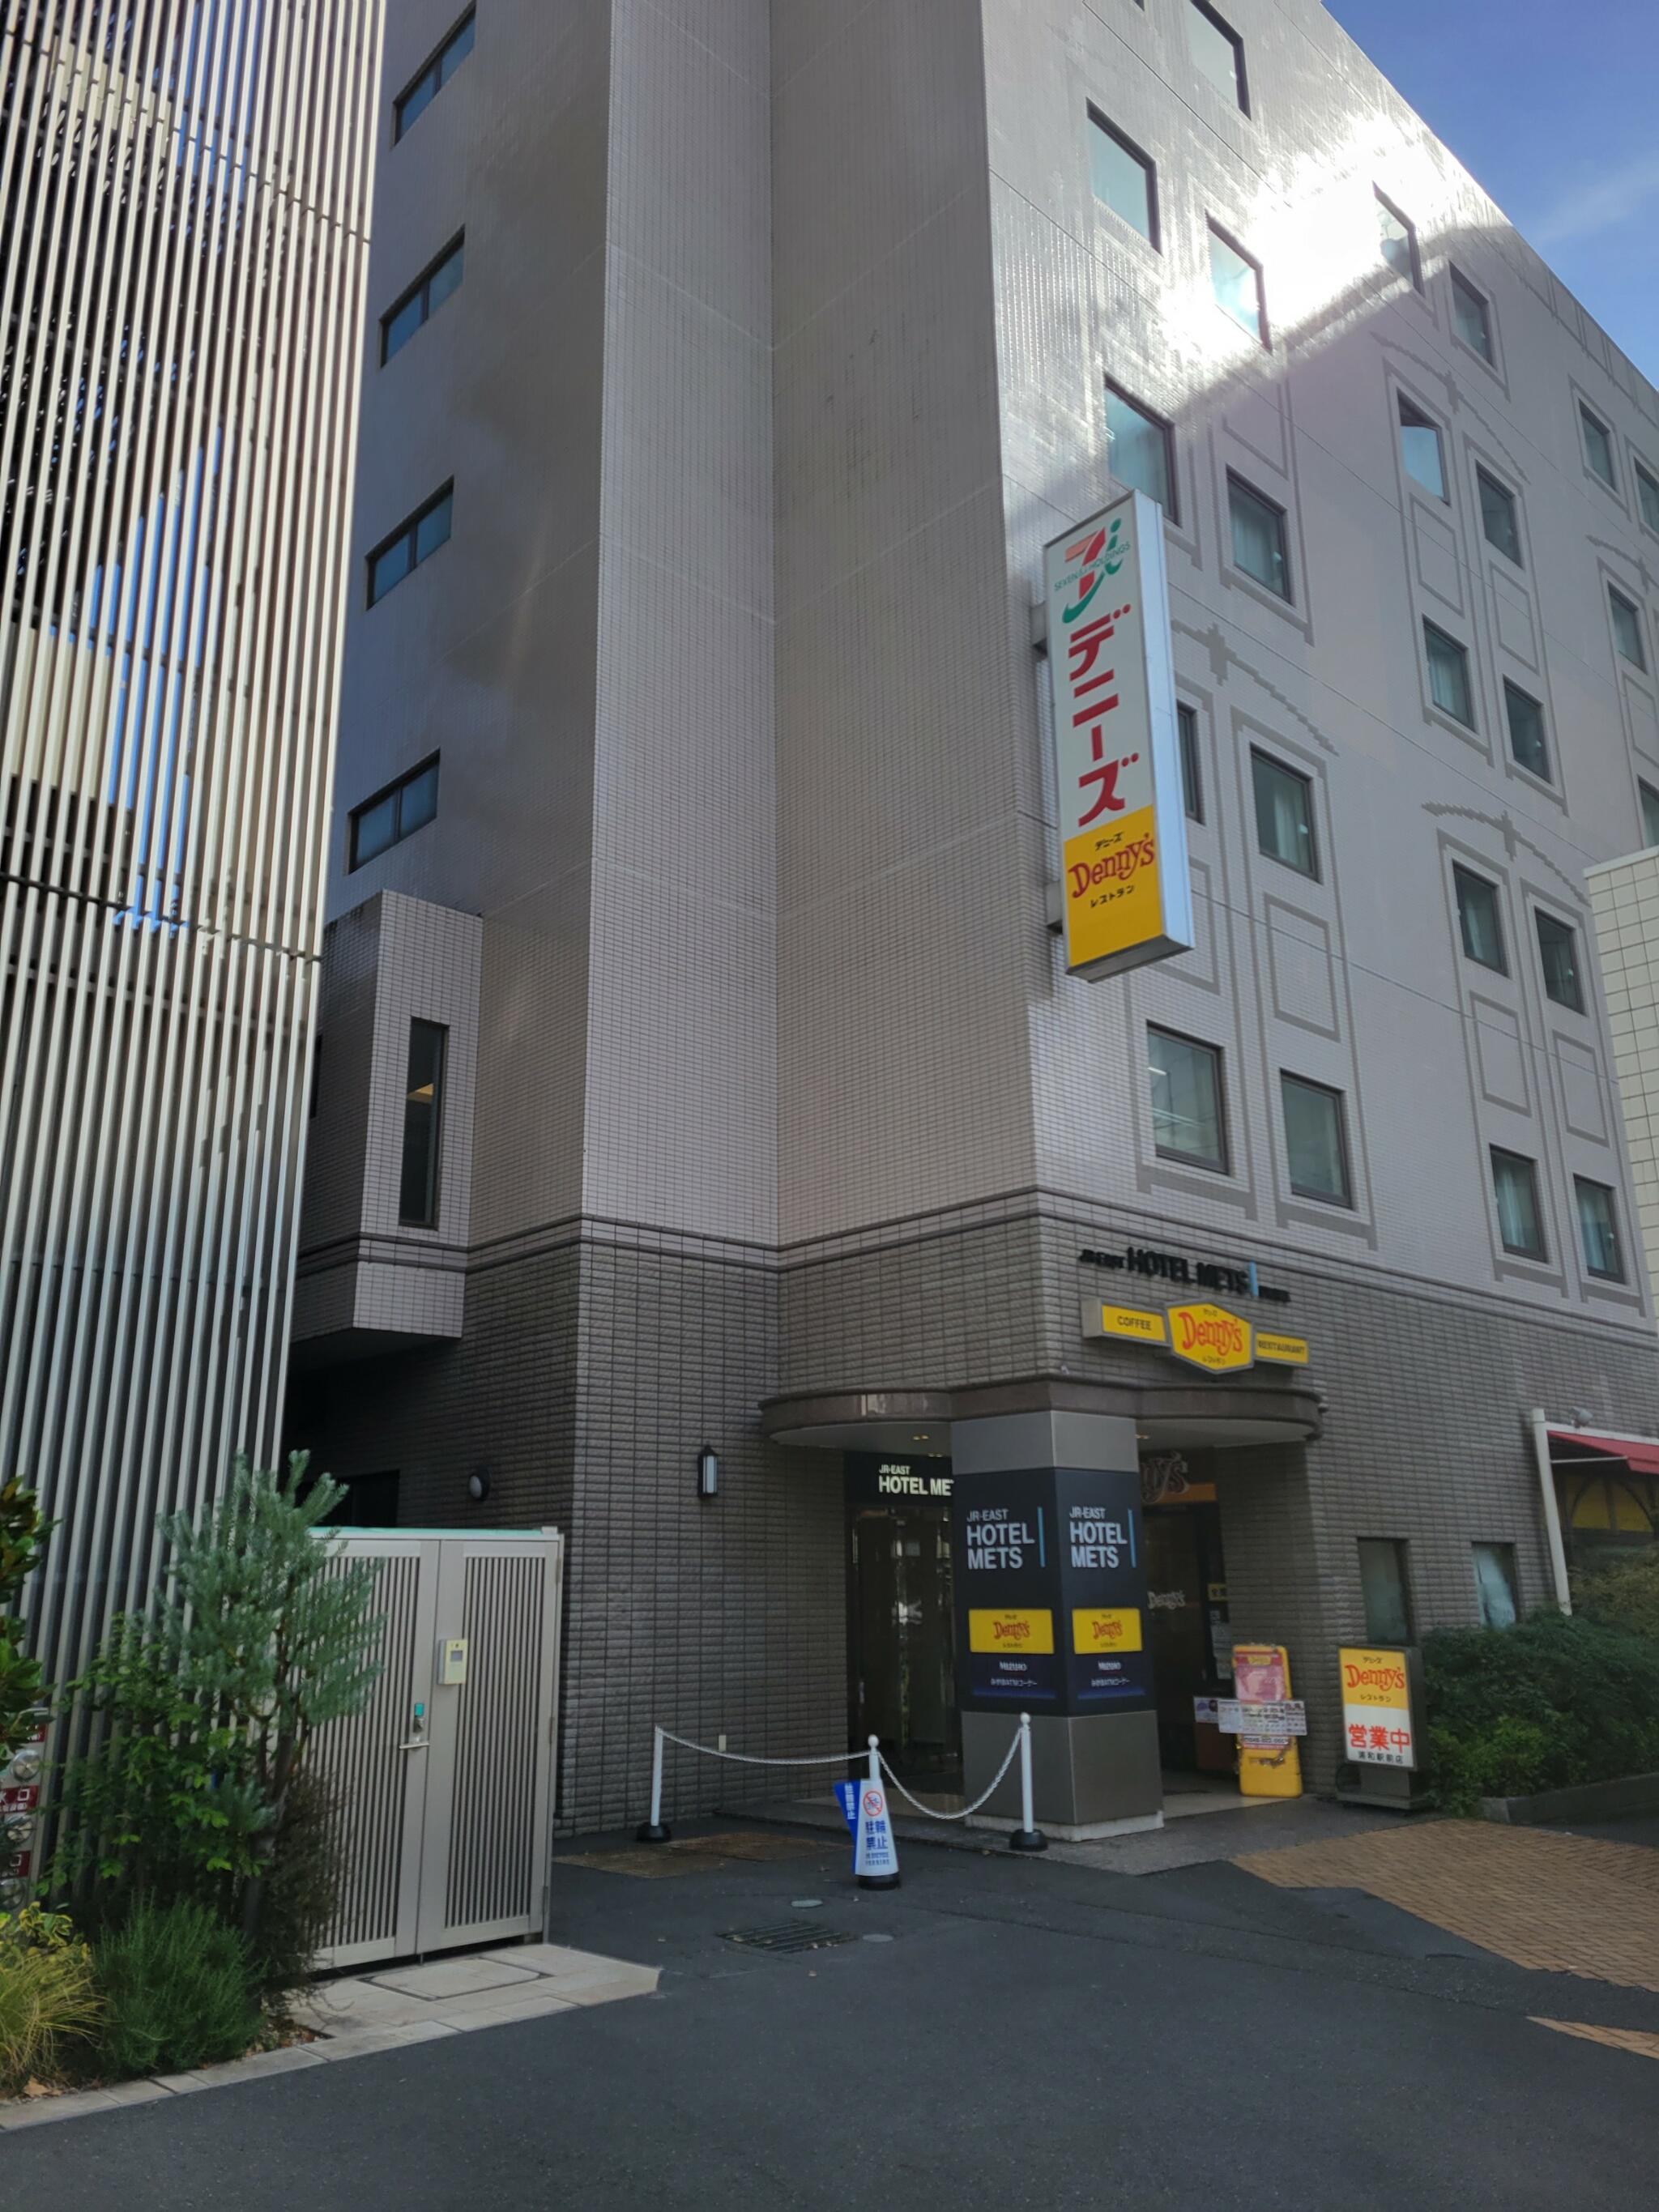 JR東日本ホテルメッツ 浦和の代表写真10